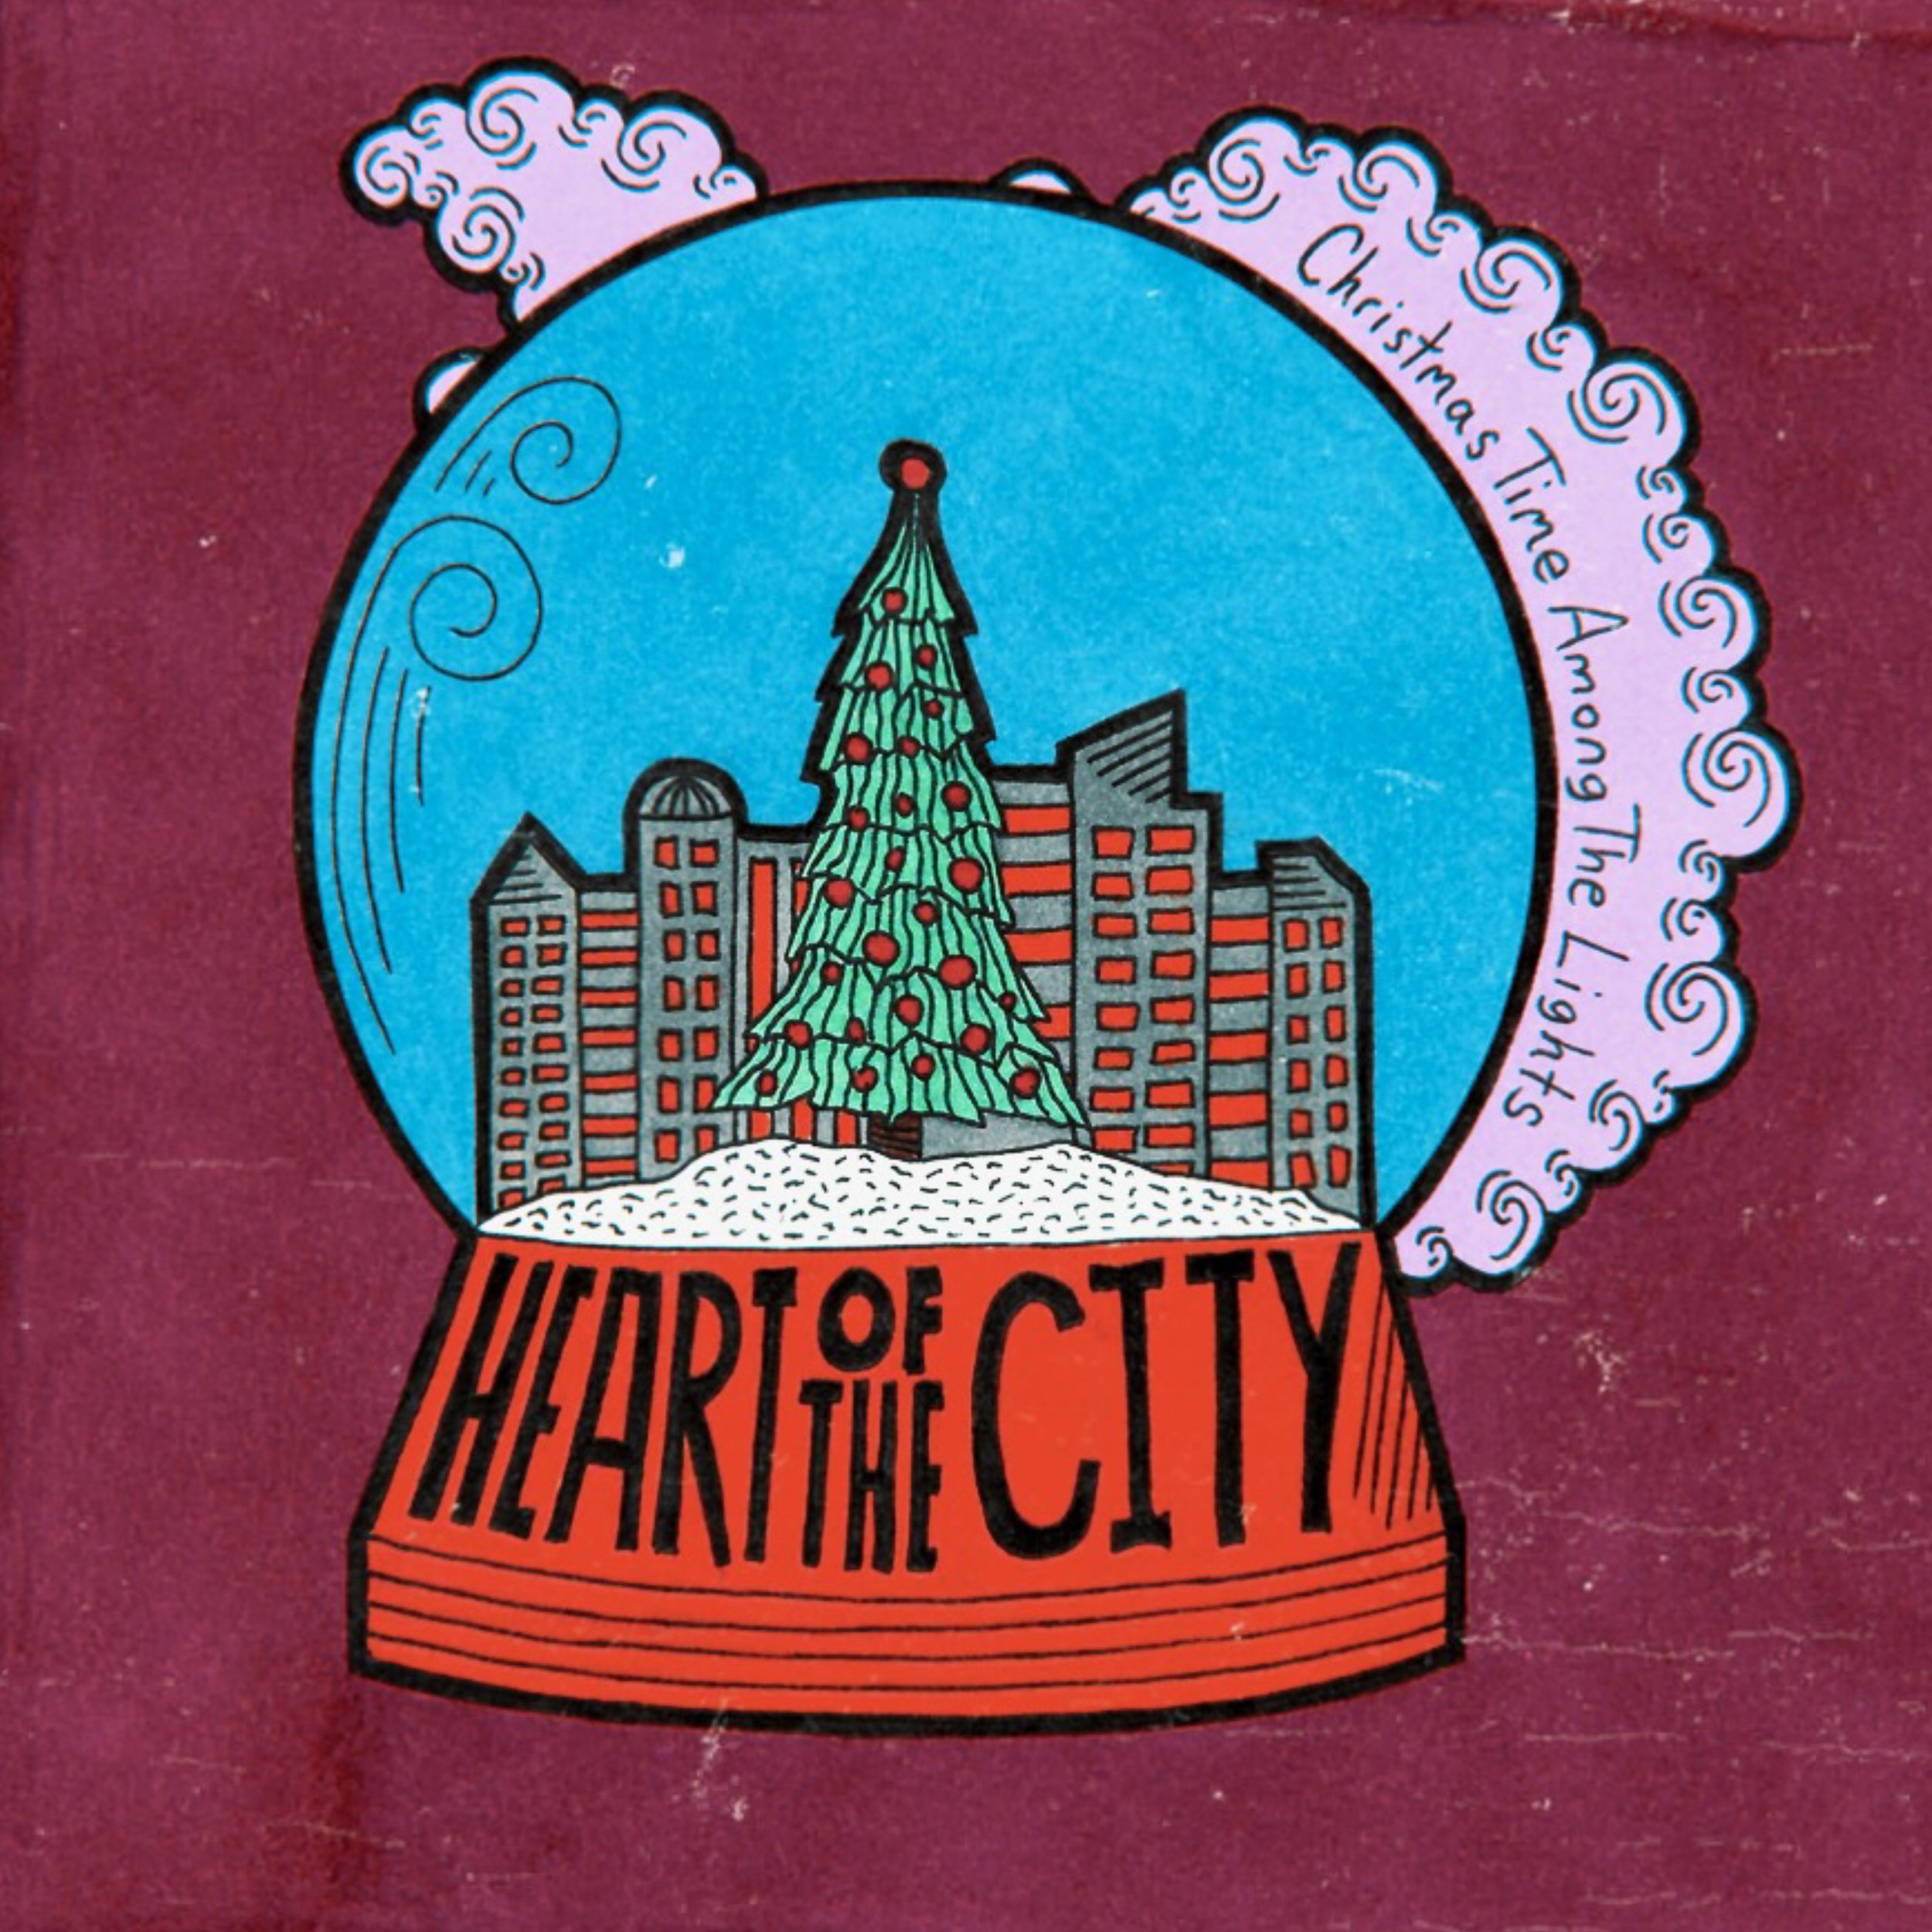 Heart of the City "Christmas Time Among the Lights" Single Cover